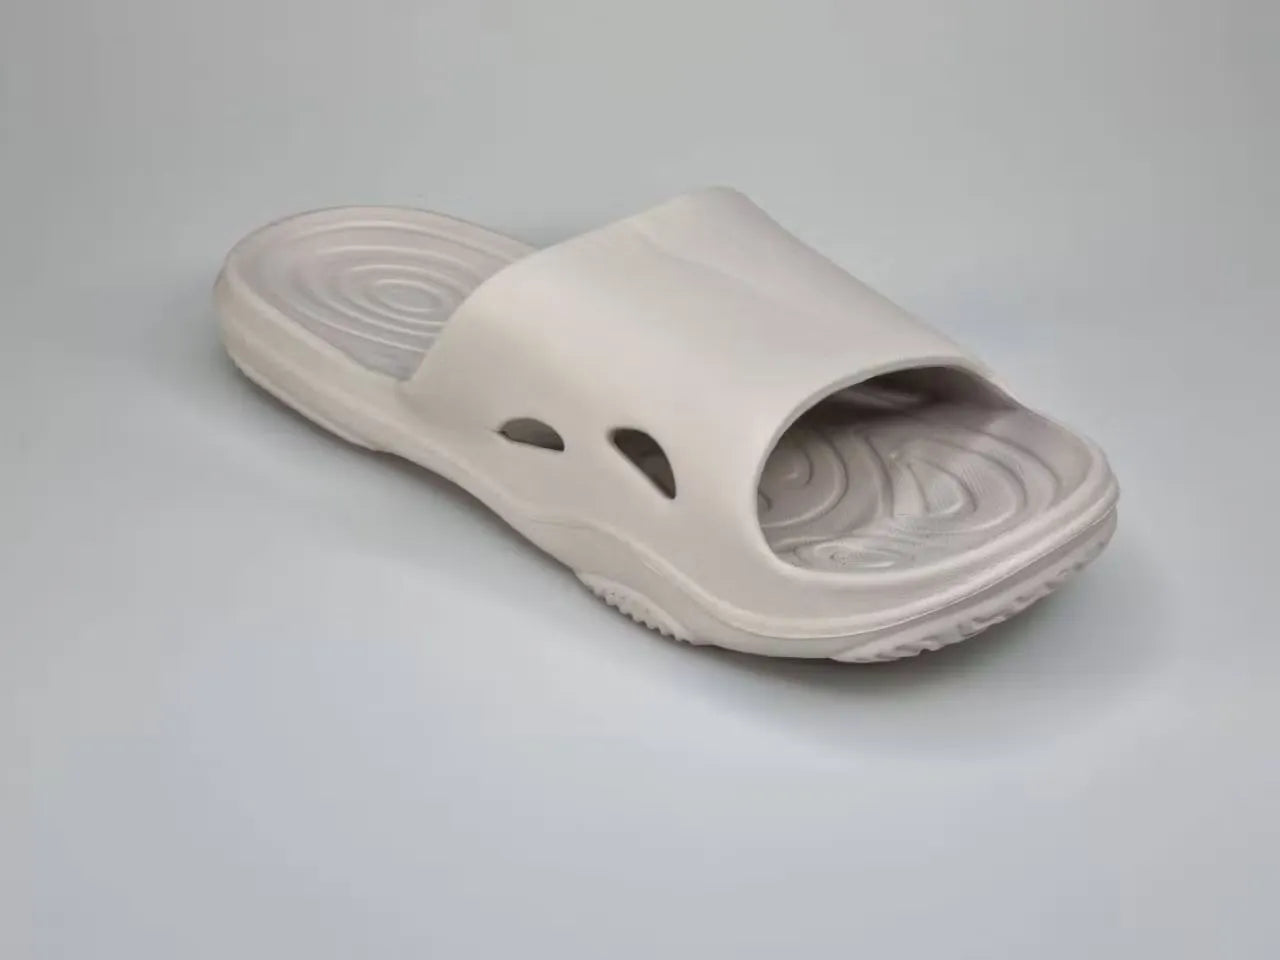 Lightweight Summar Slippers for Unisex Light Grey - Elevate Your Comfort Game